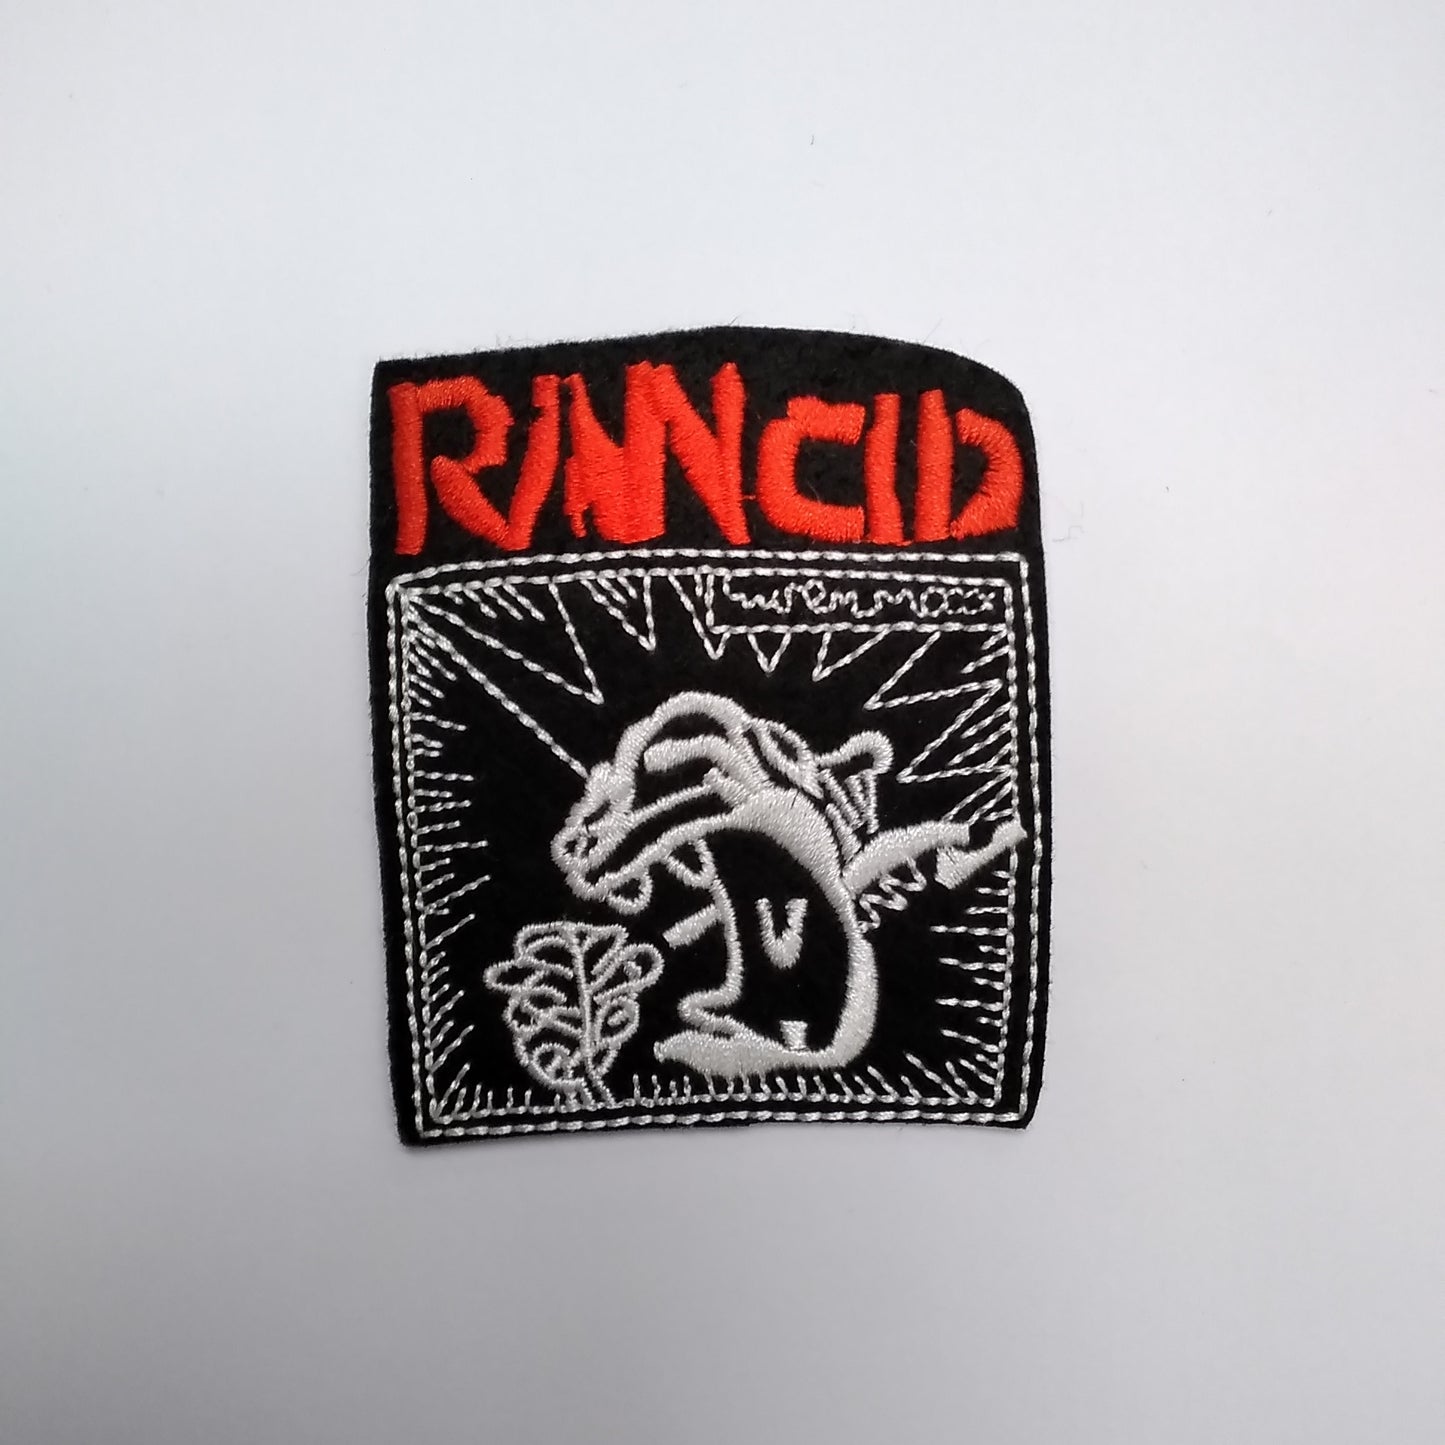 Rancid patch